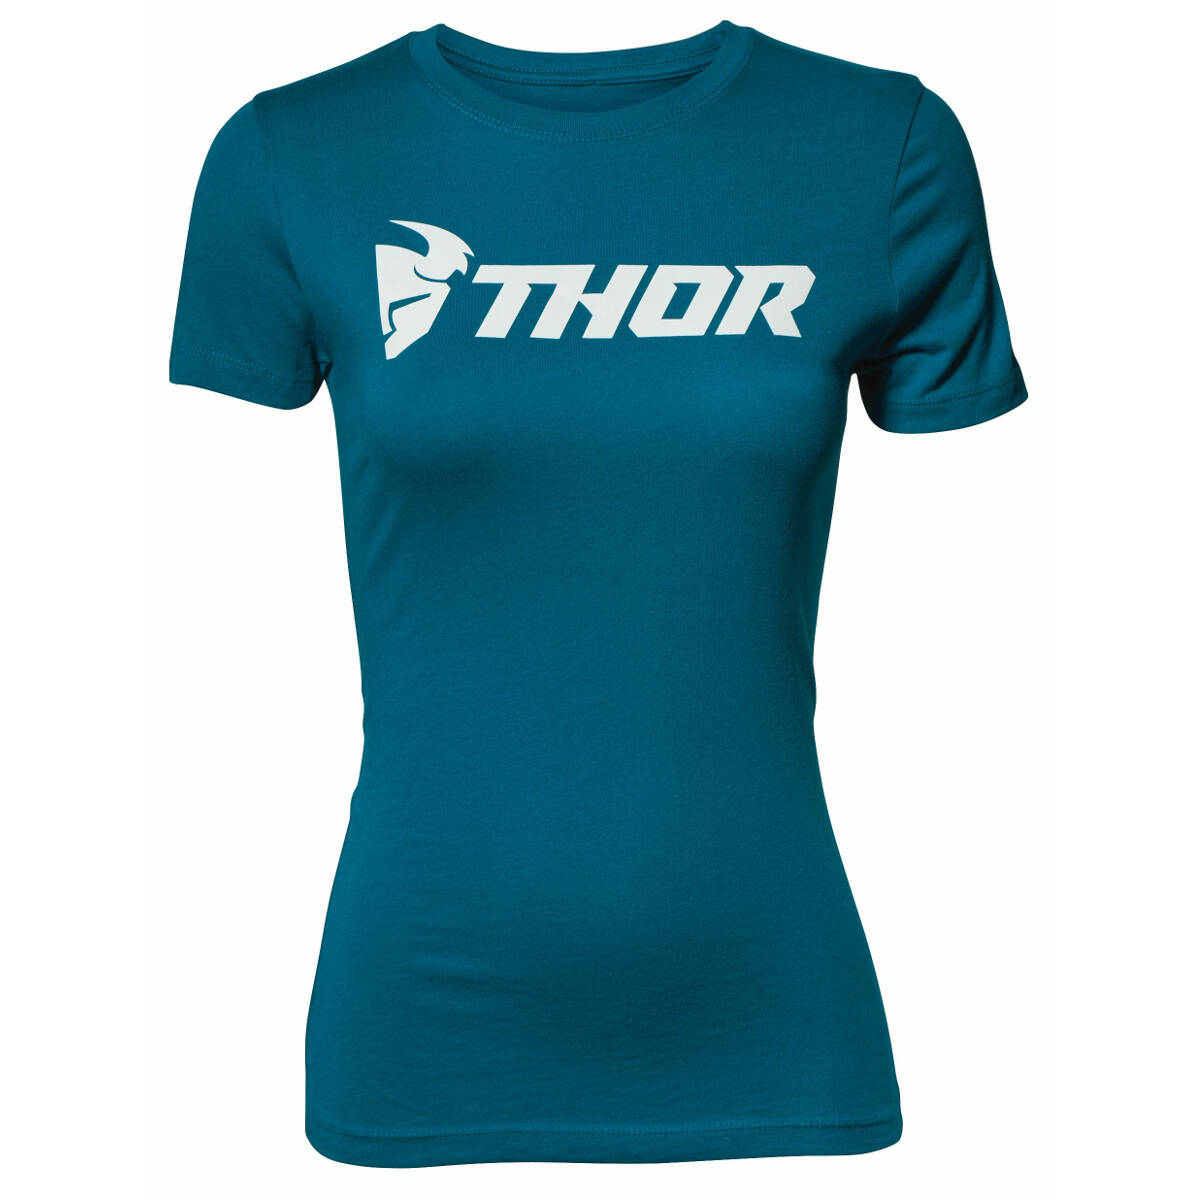 Thor Donna T-Shirt Loud Teal